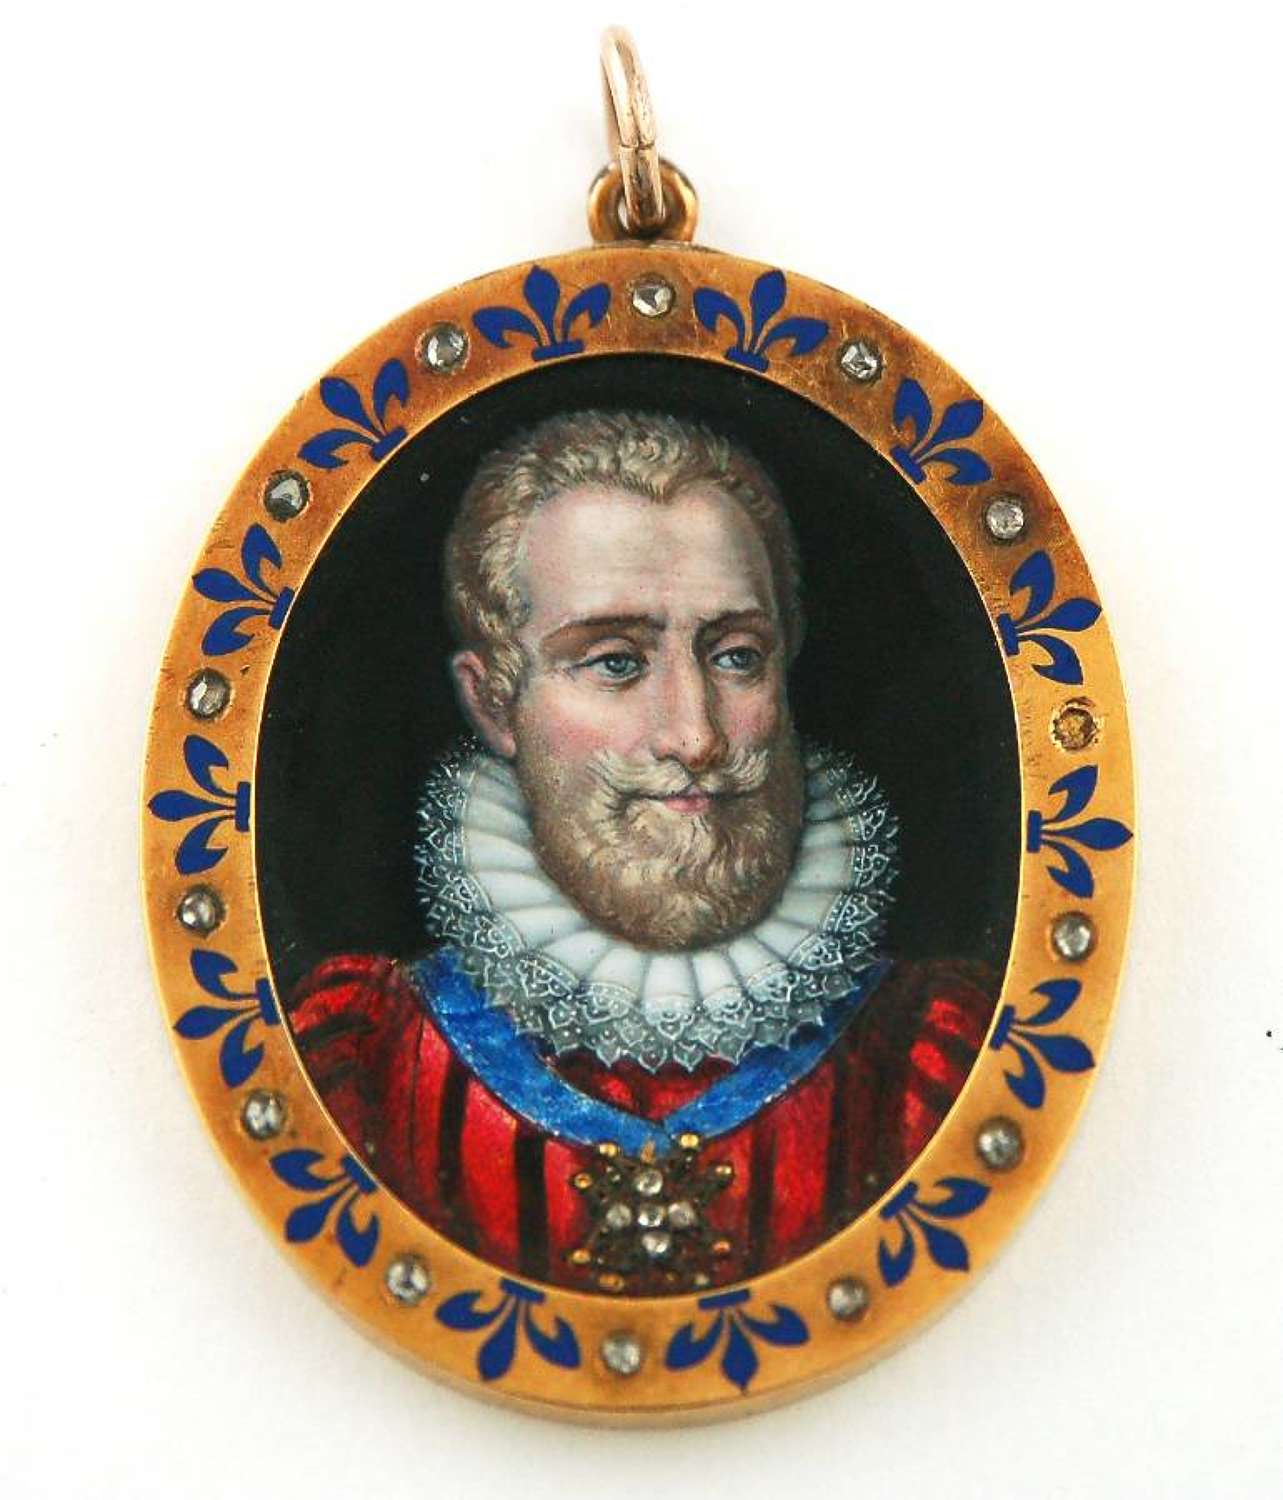 Henri IV of France